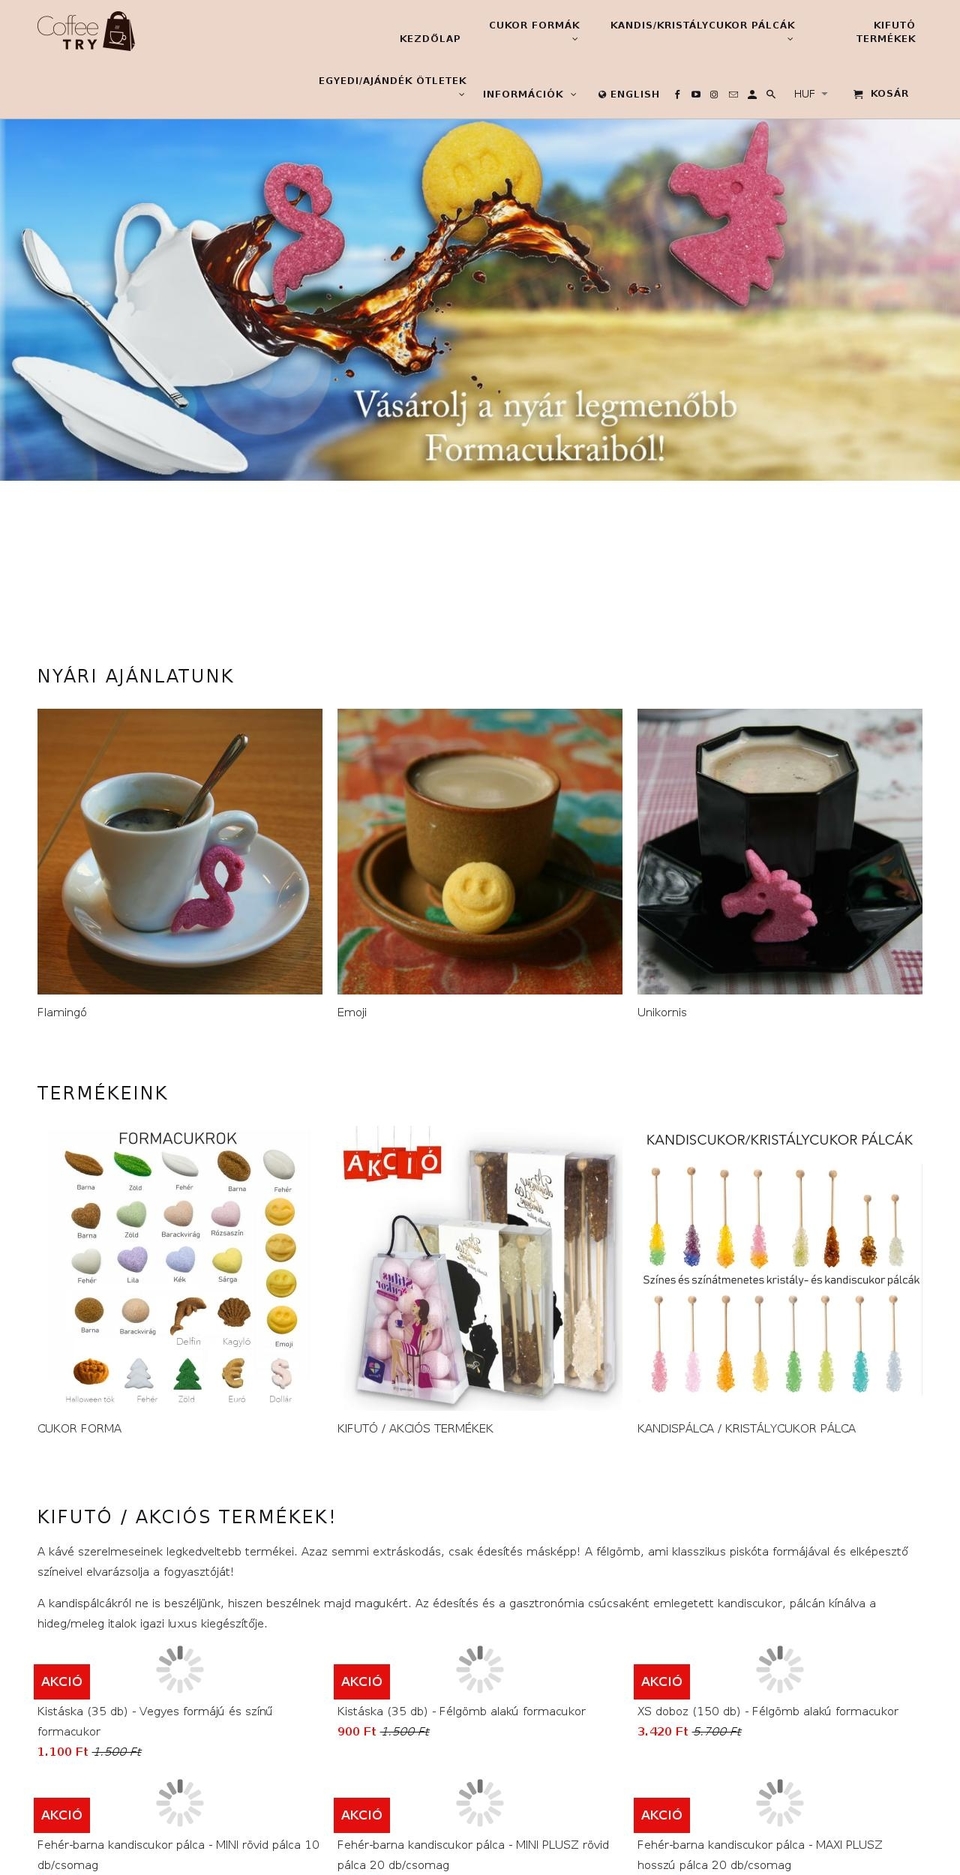 coffeetry.hu shopify website screenshot